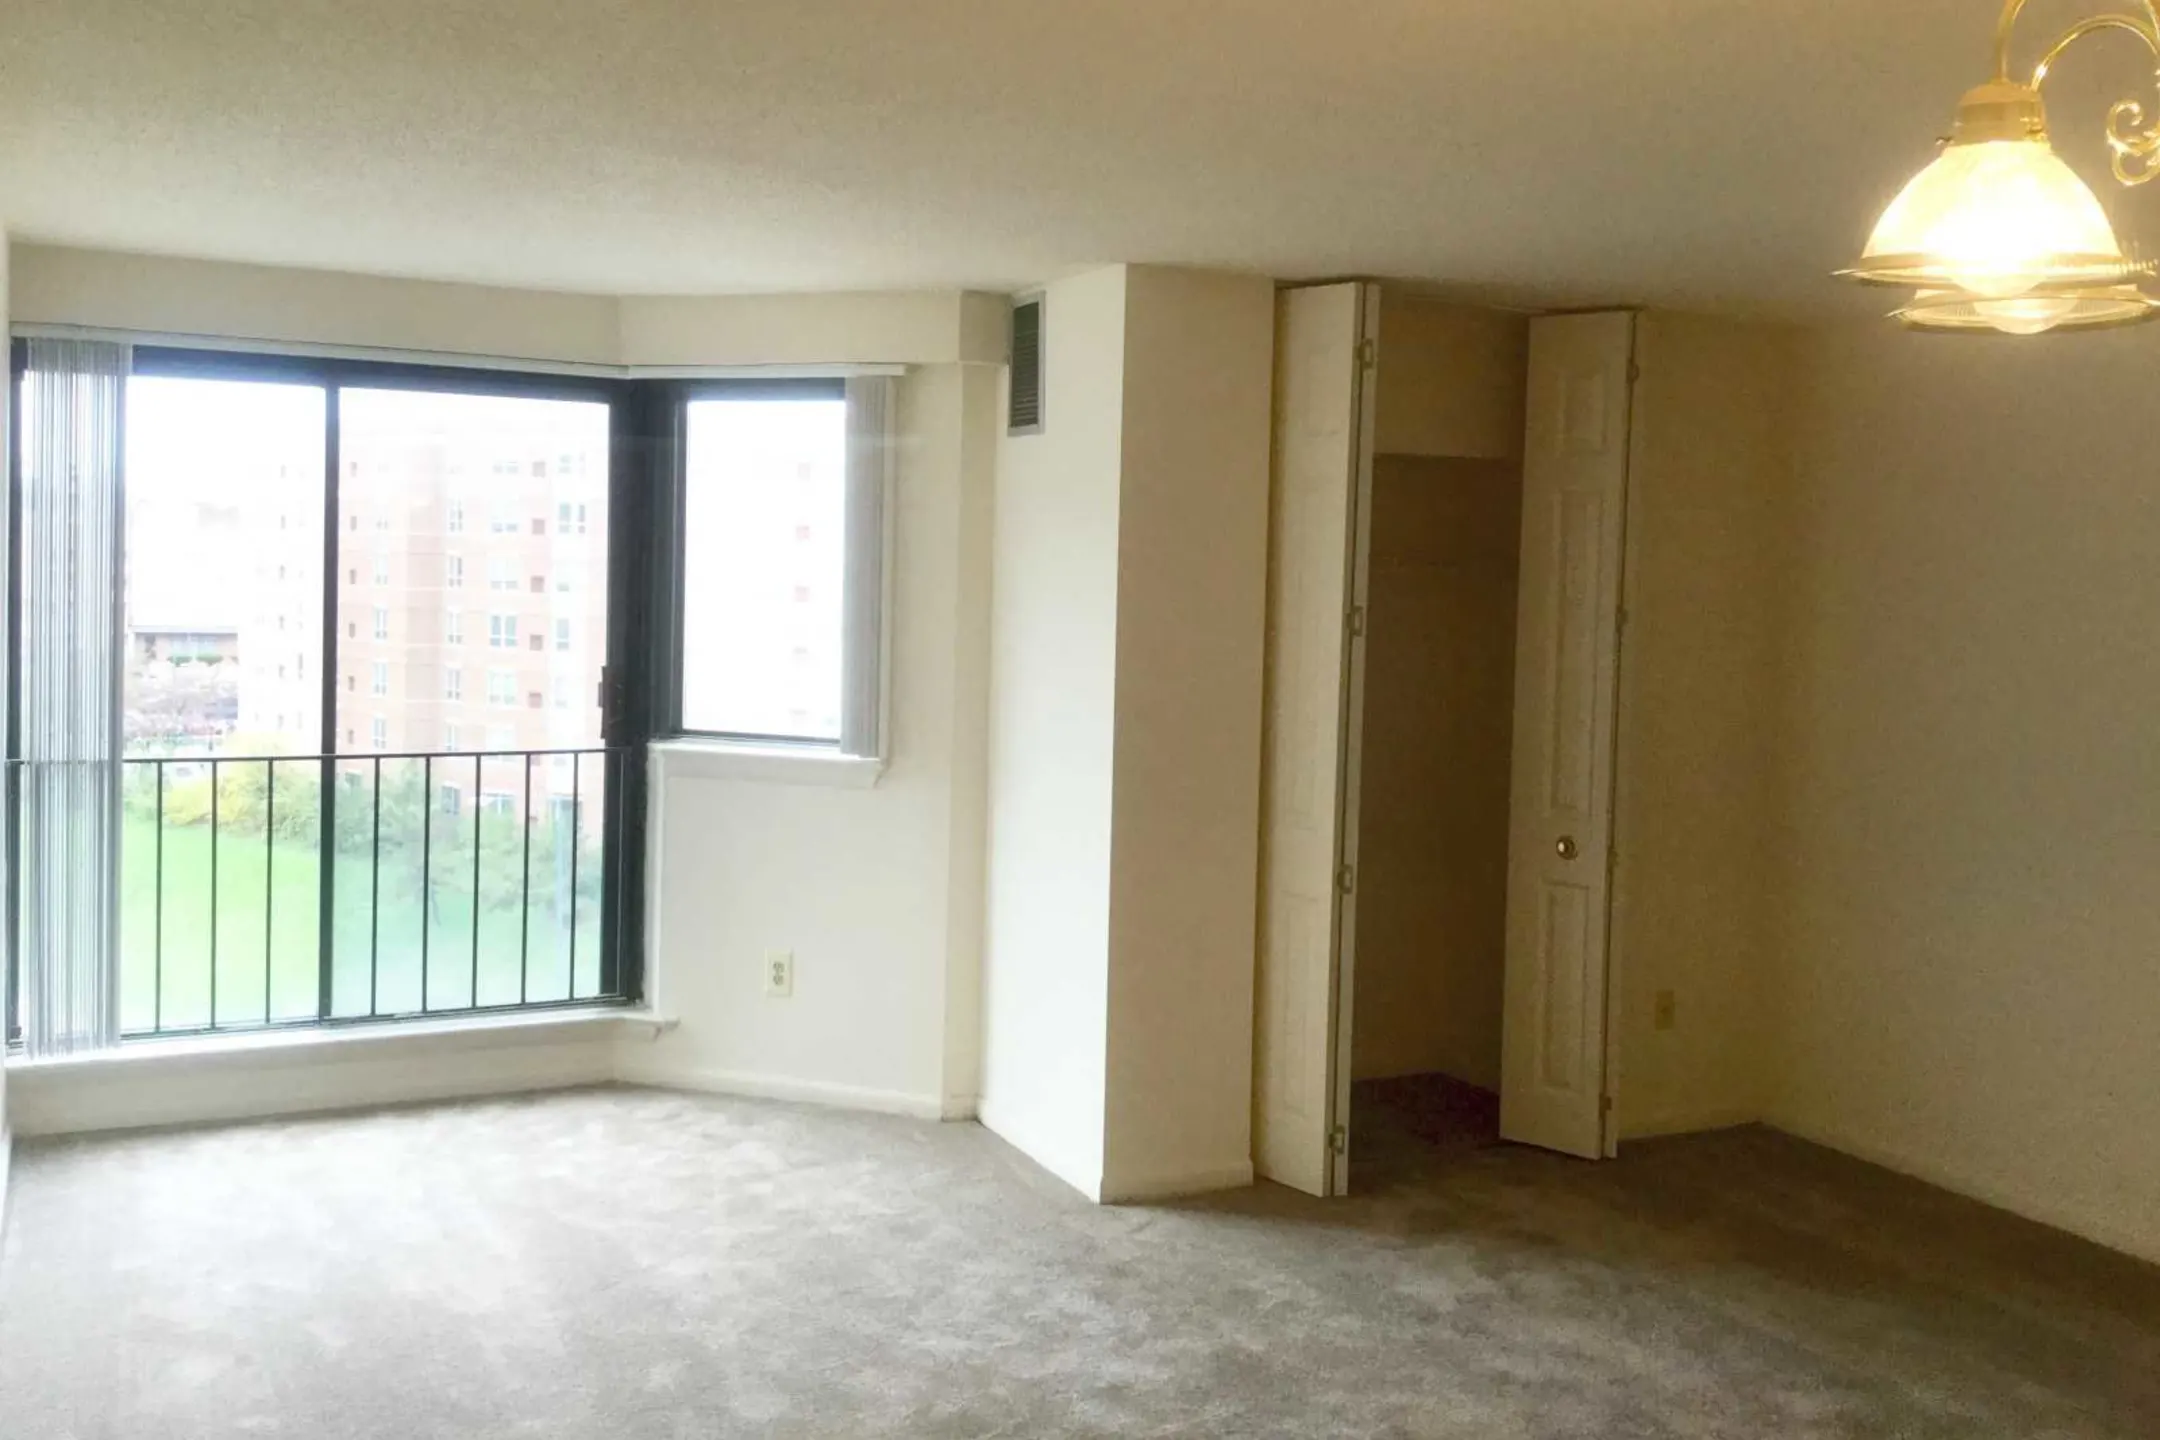 Living Room - Carmel Plaza Apartments - Washington, DC